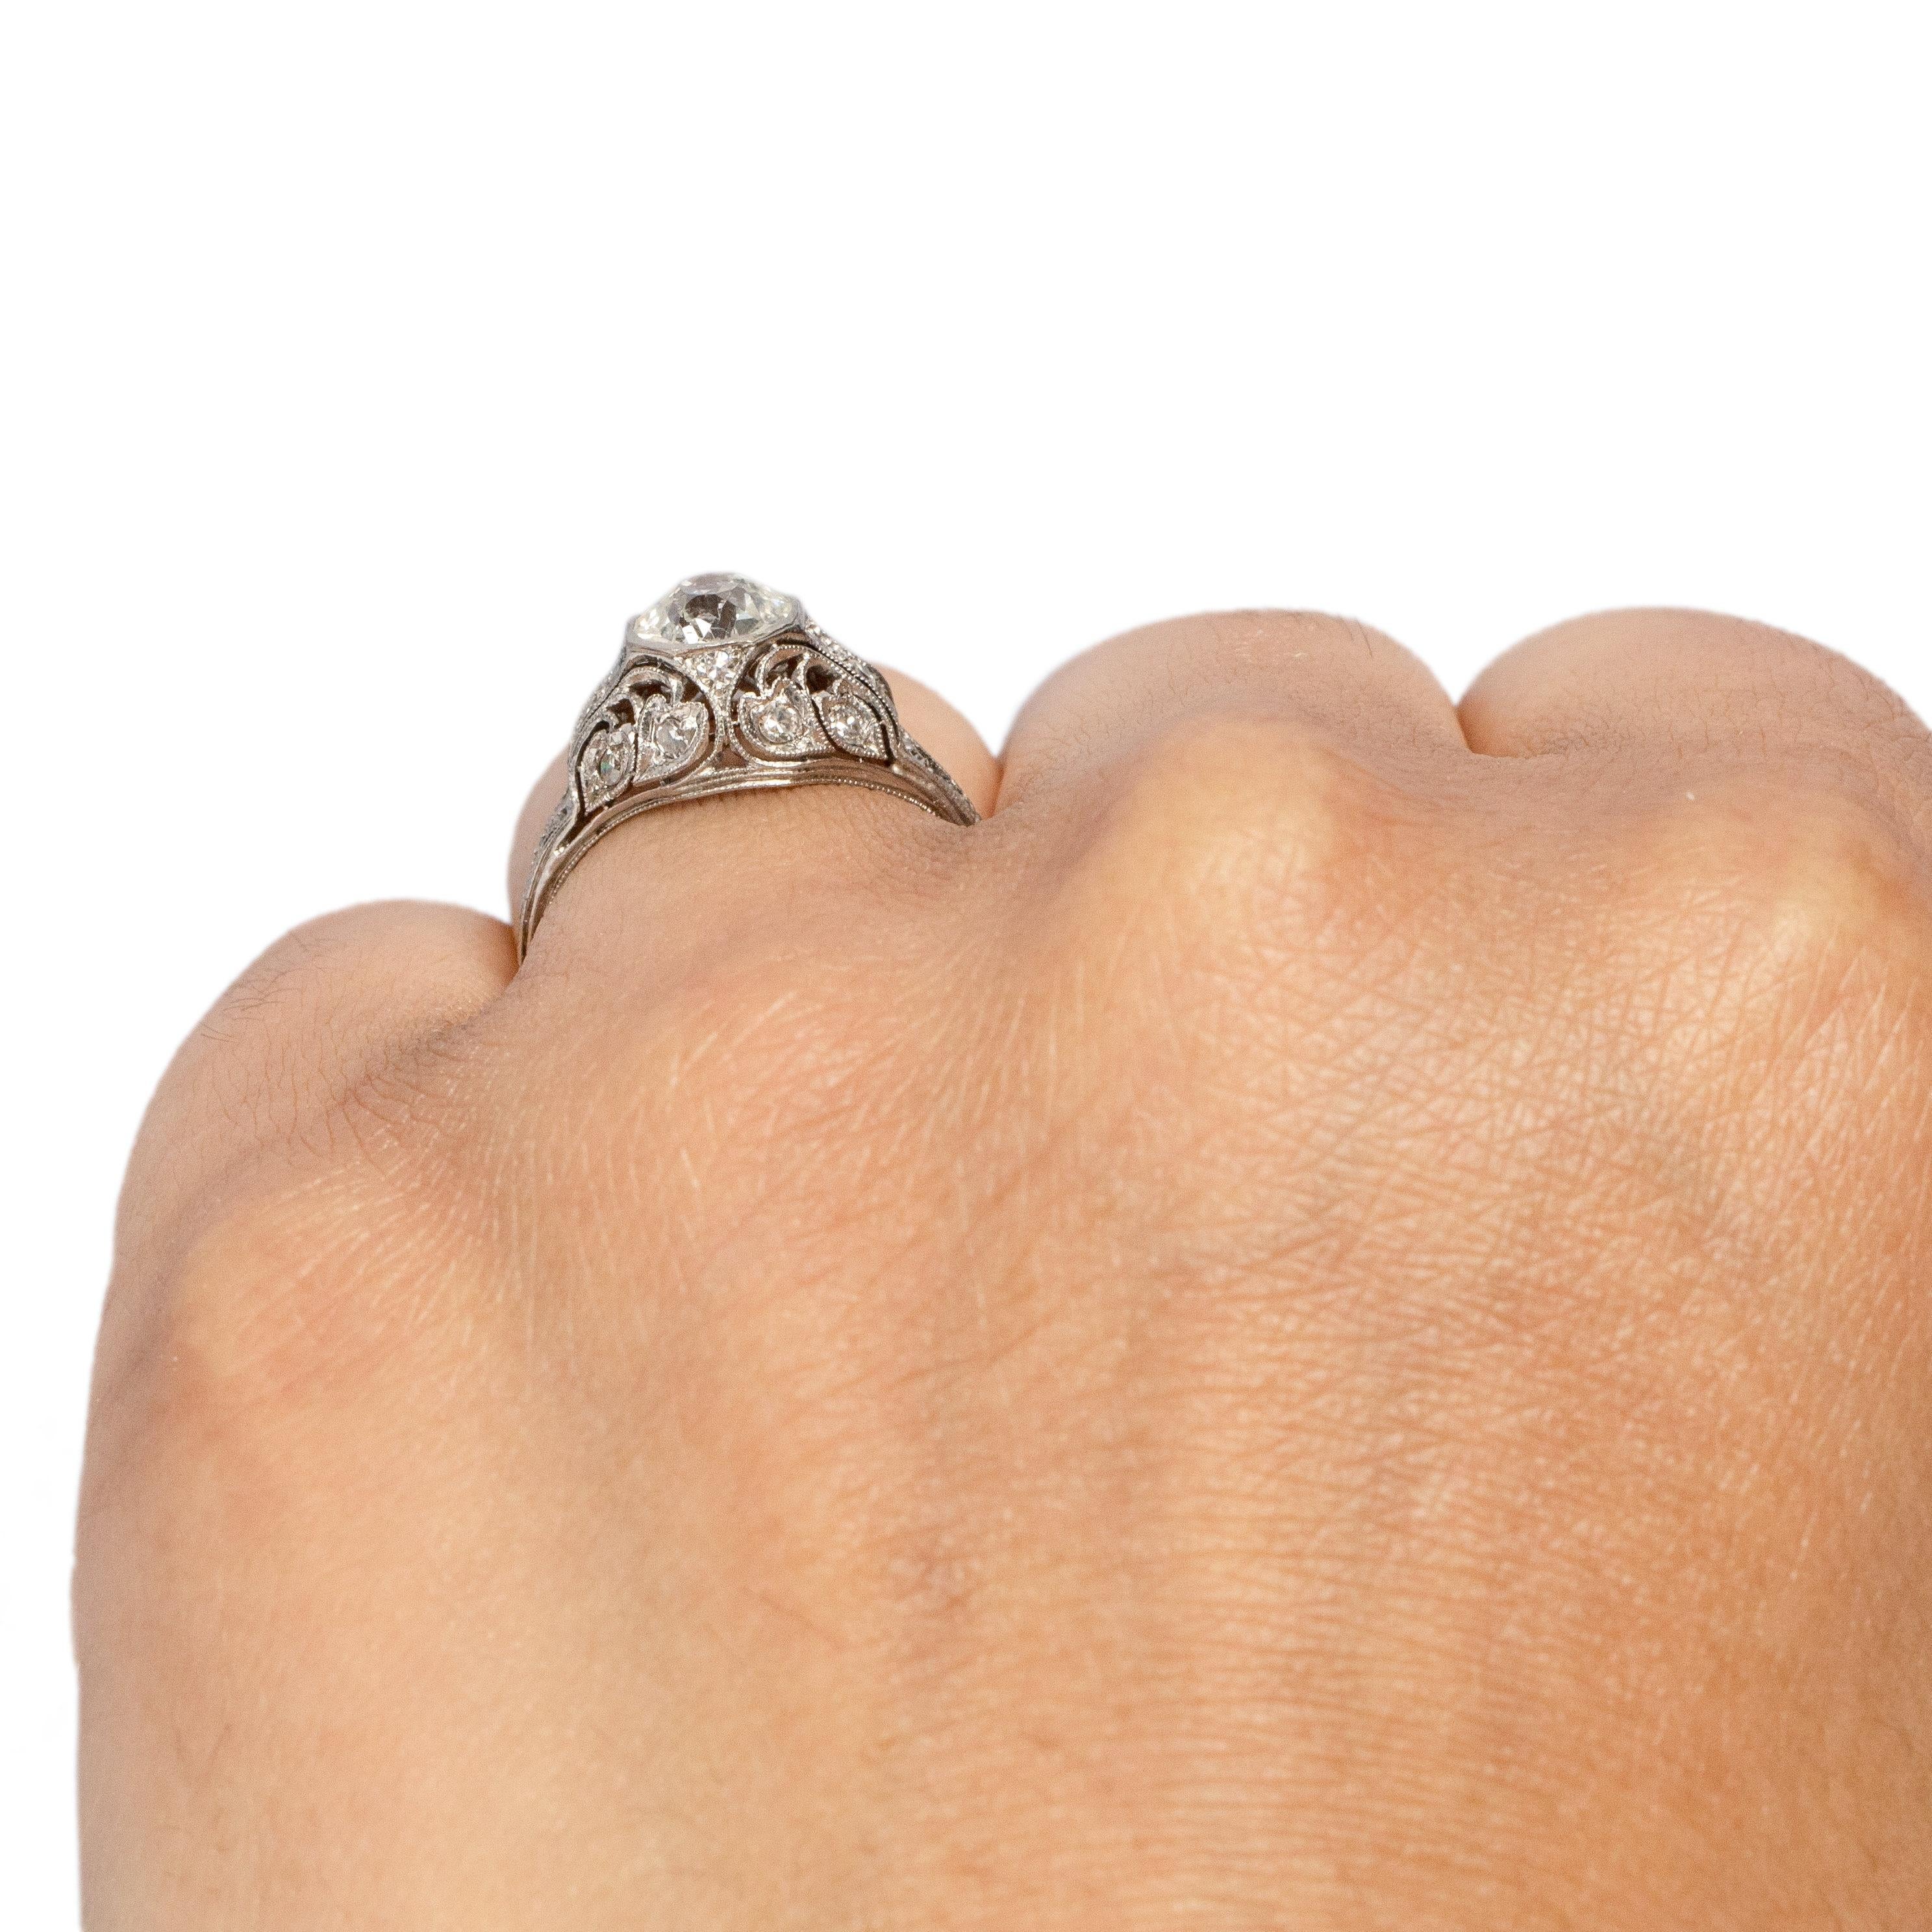 Circa 1901 Edwardian Platinum .98Ct Diamond Antique Filigree Engagement Ring For Sale 2